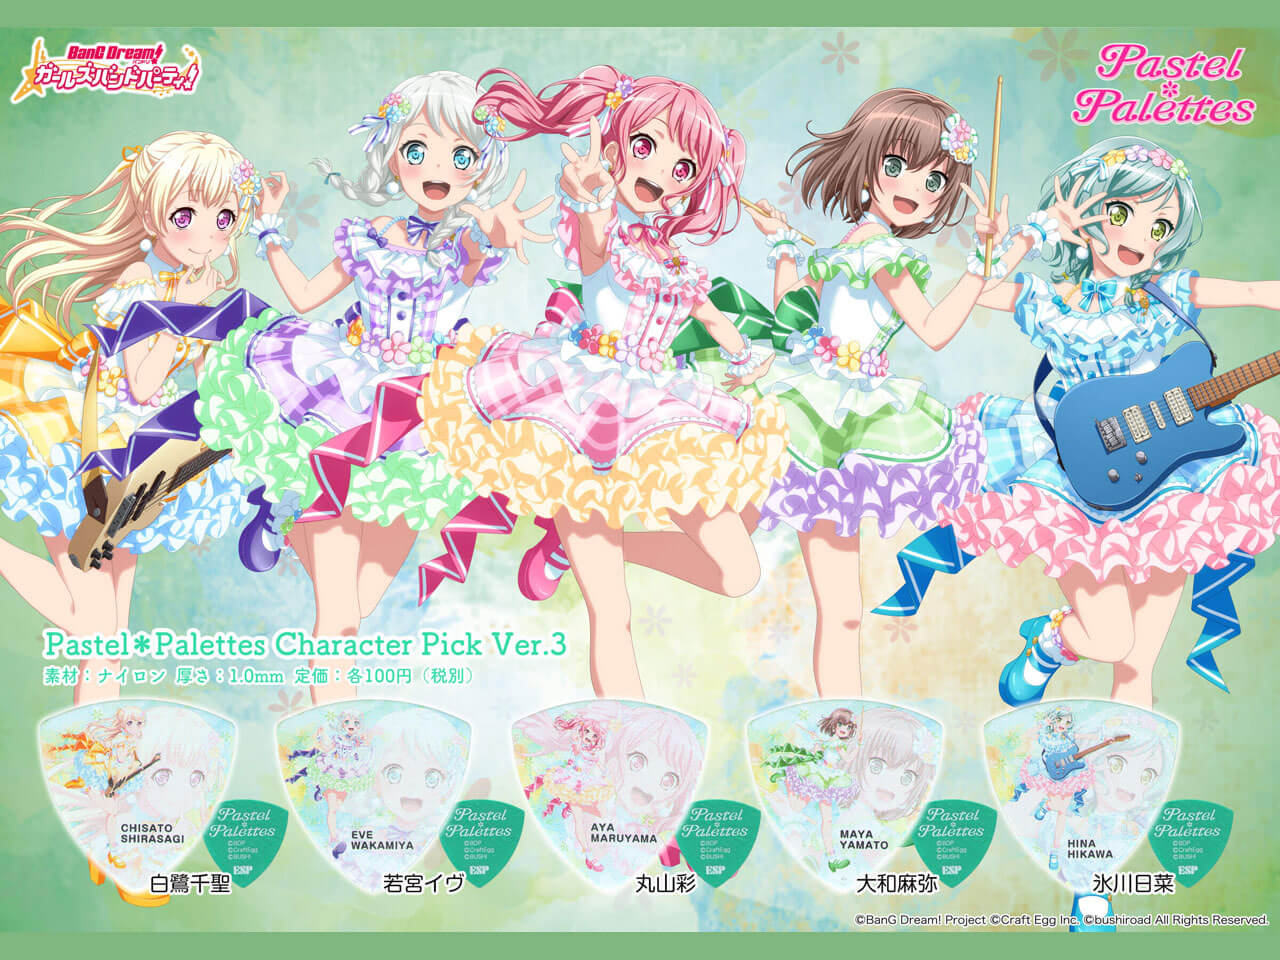 【ESP×BanG Dream!コラボピック】Pastel*Palettes Character Pick Ver.3 "丸山彩"10枚セット（GBP AYA PASTEL PALETTES 3）